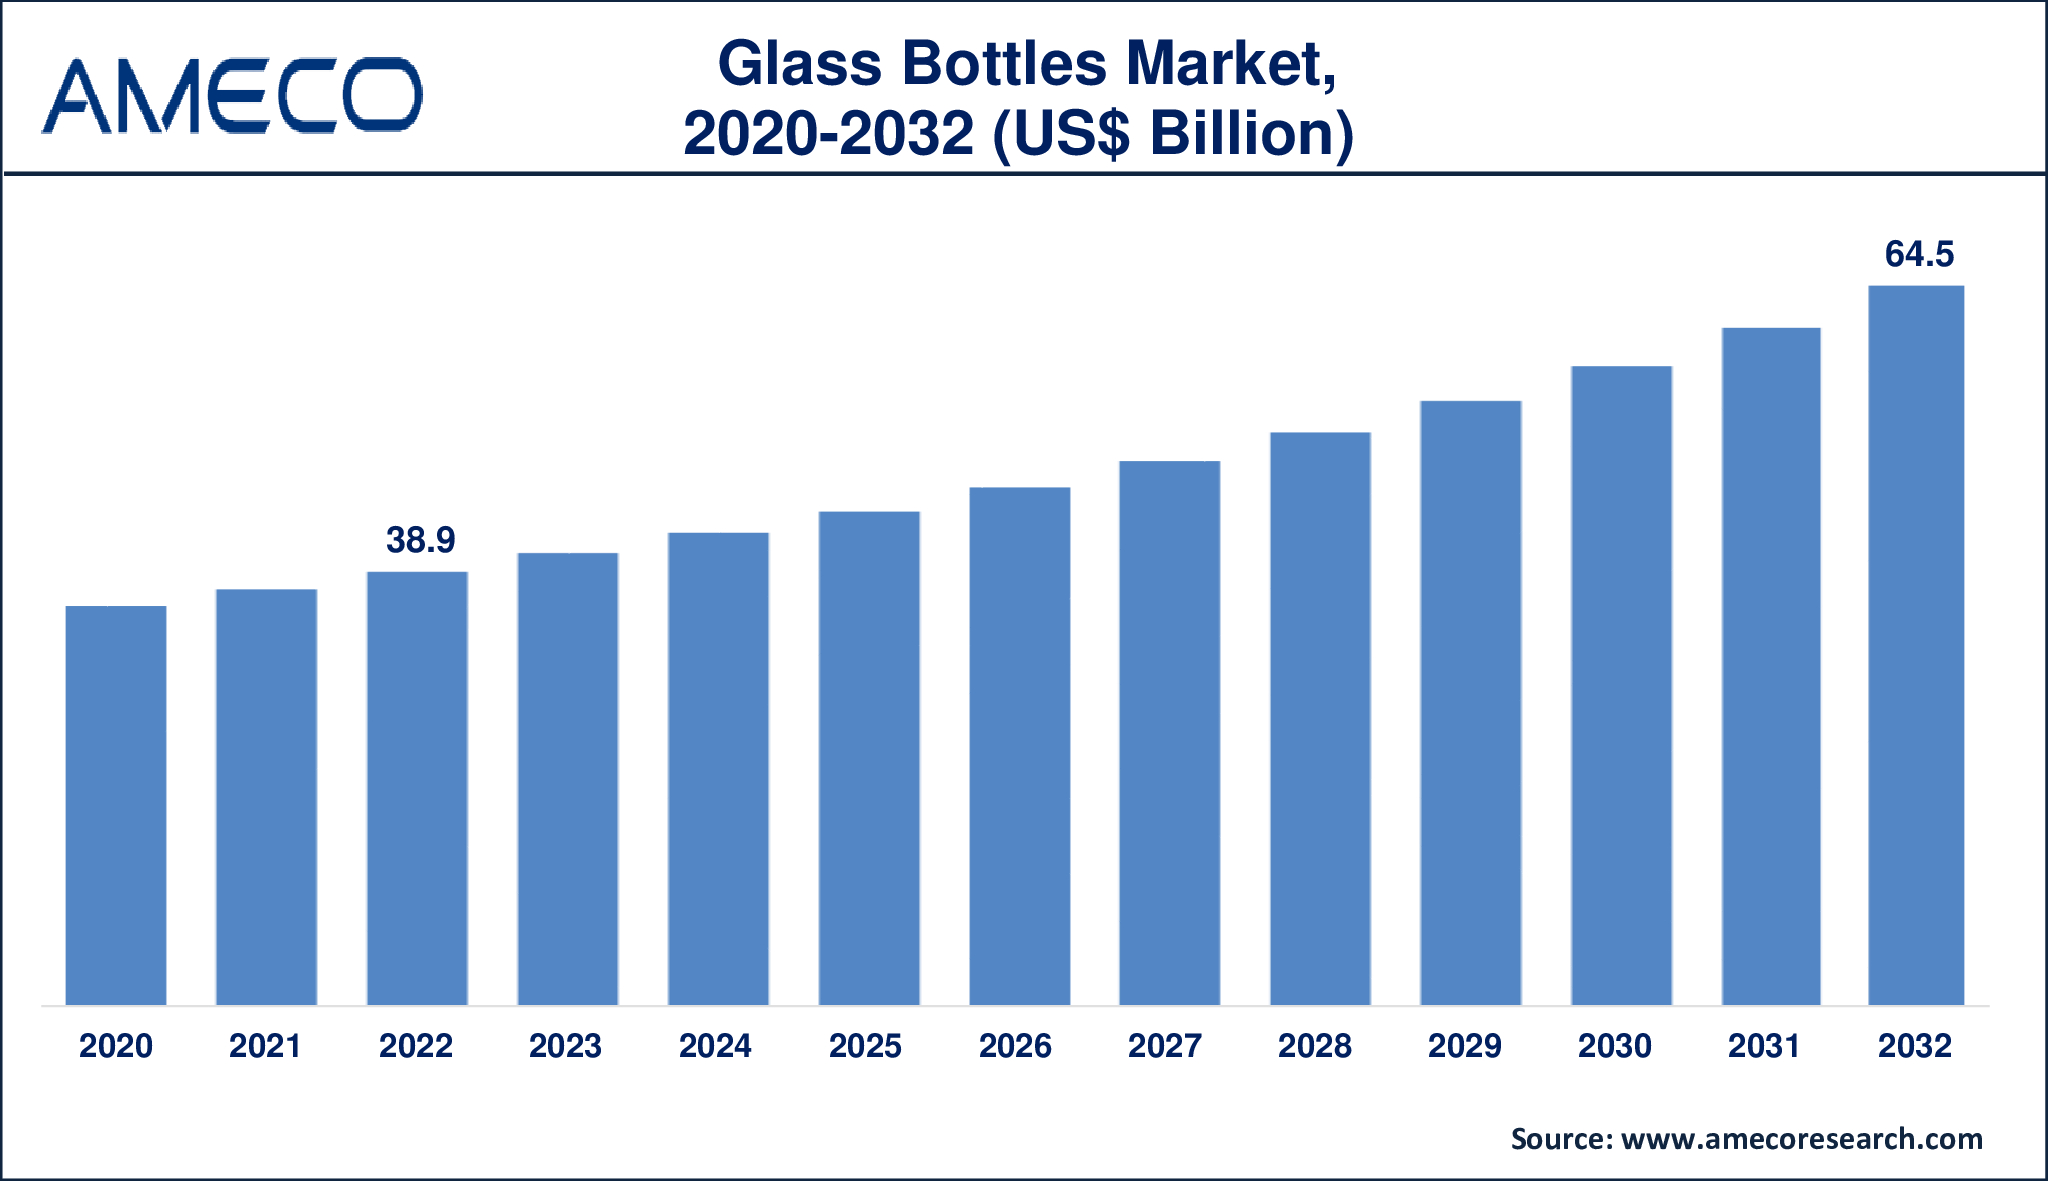 Glass Bottles Market Dynamics